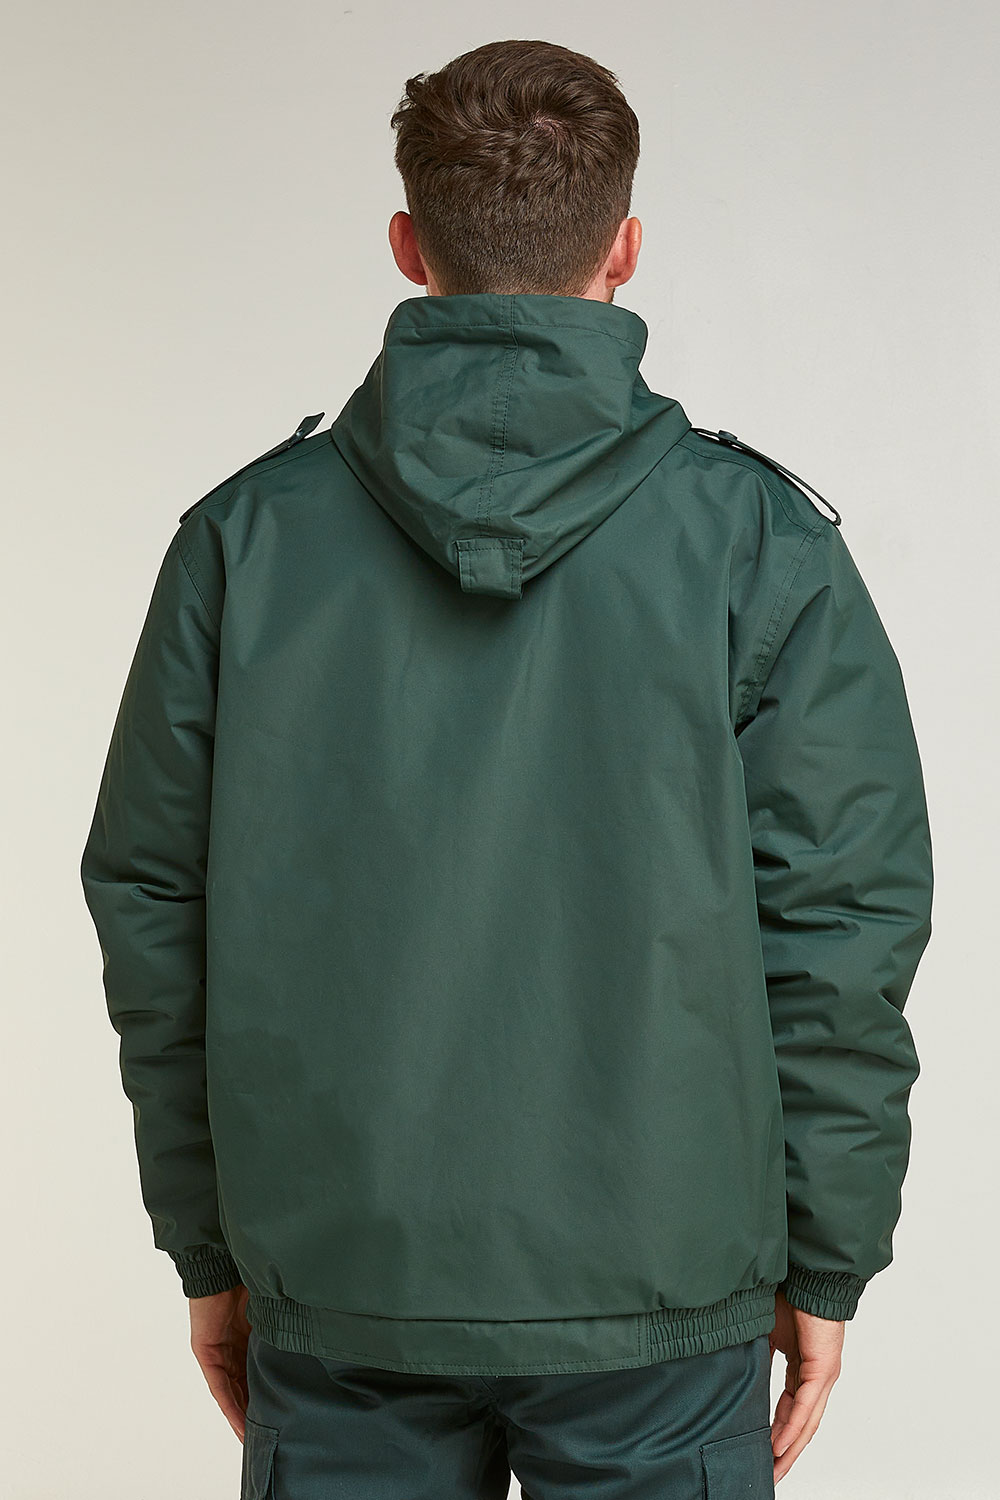 Ambulance Waterproof Jacket | Sugdens | Corporate Clothing, Uniforms ...